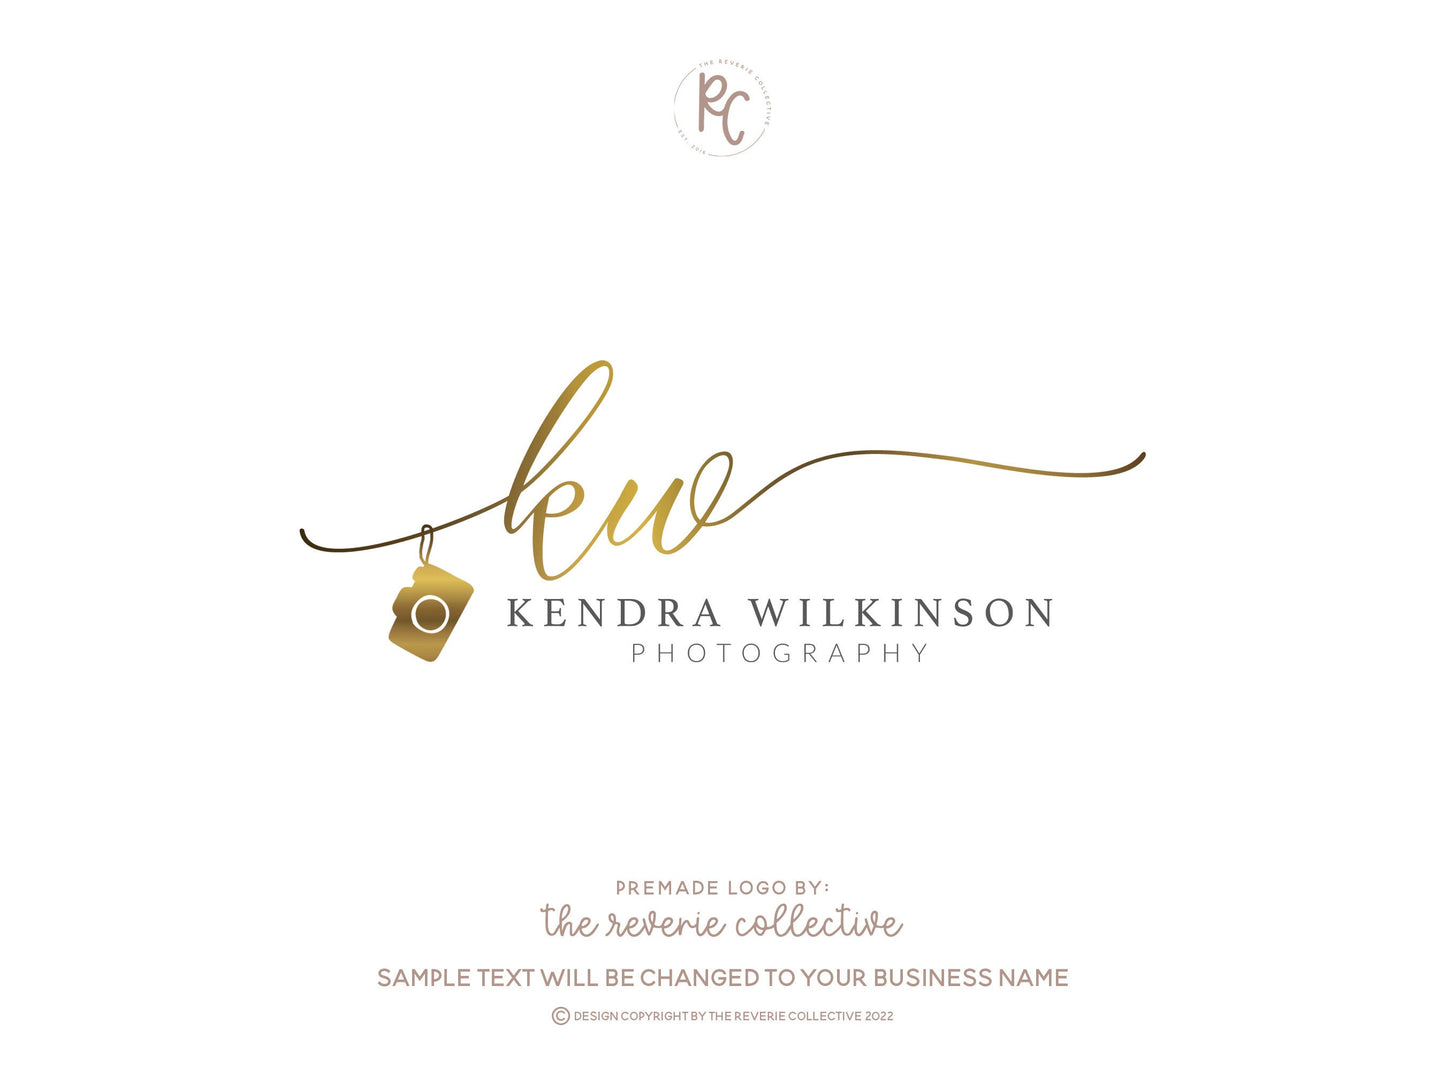 Kendra Wilkinson | Premade Logo Design | Camera, Photography, Gold Foil, Initials